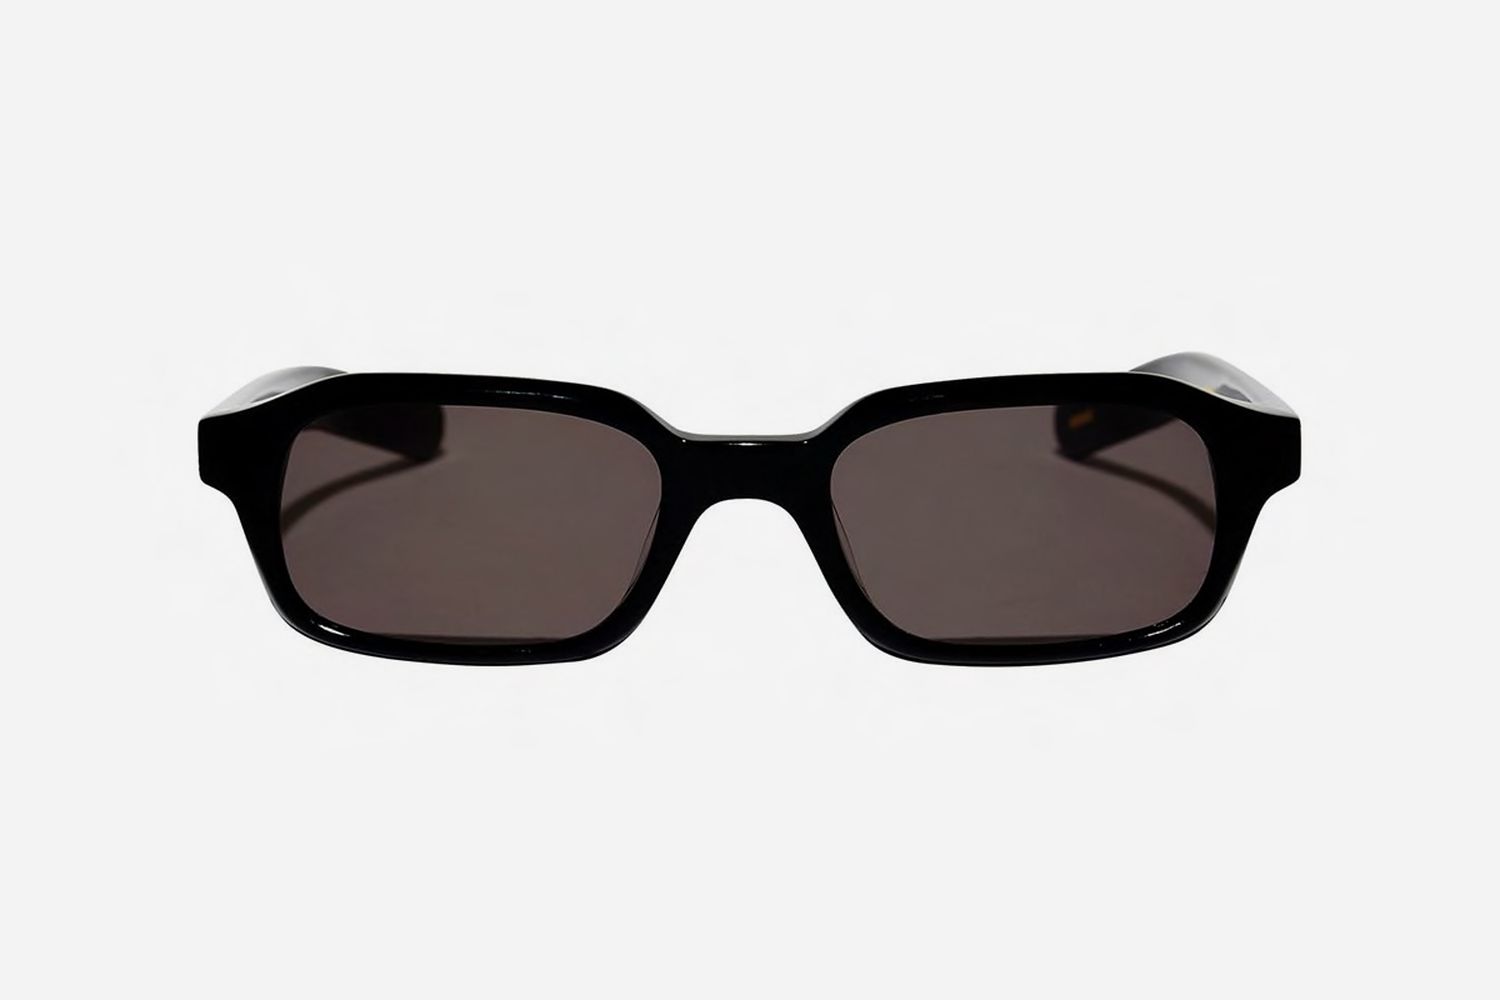 Hanky Sunglasses